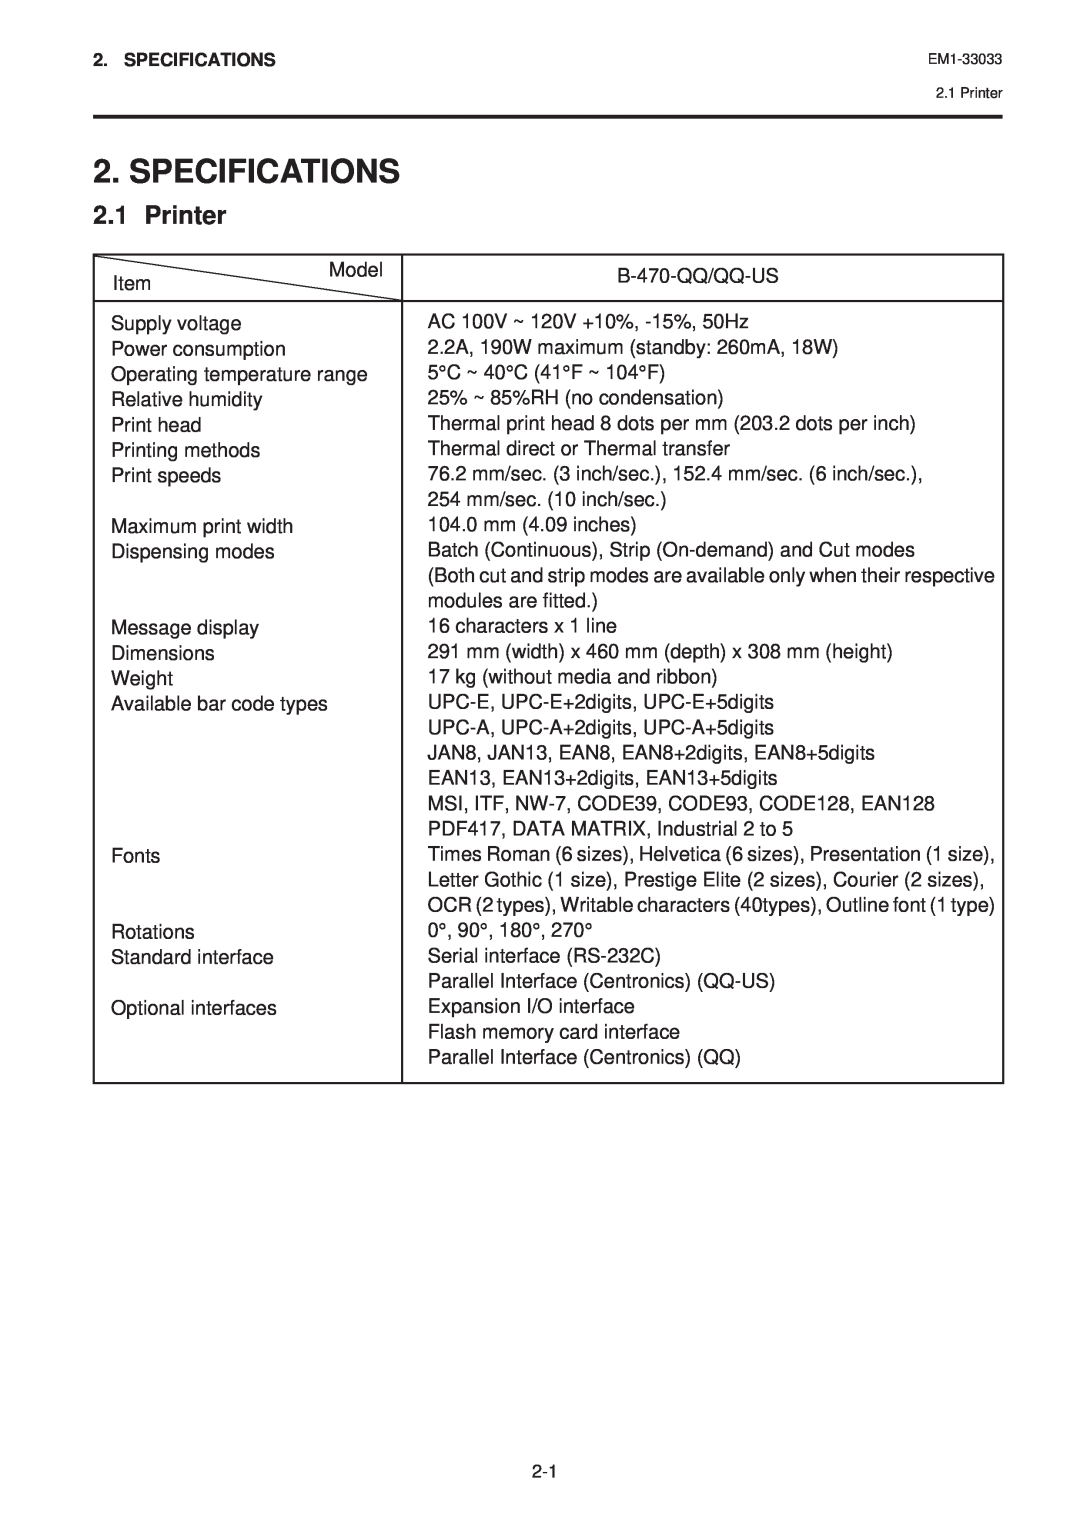 Toshiba EM1-33033E owner manual Specifications, Printer 